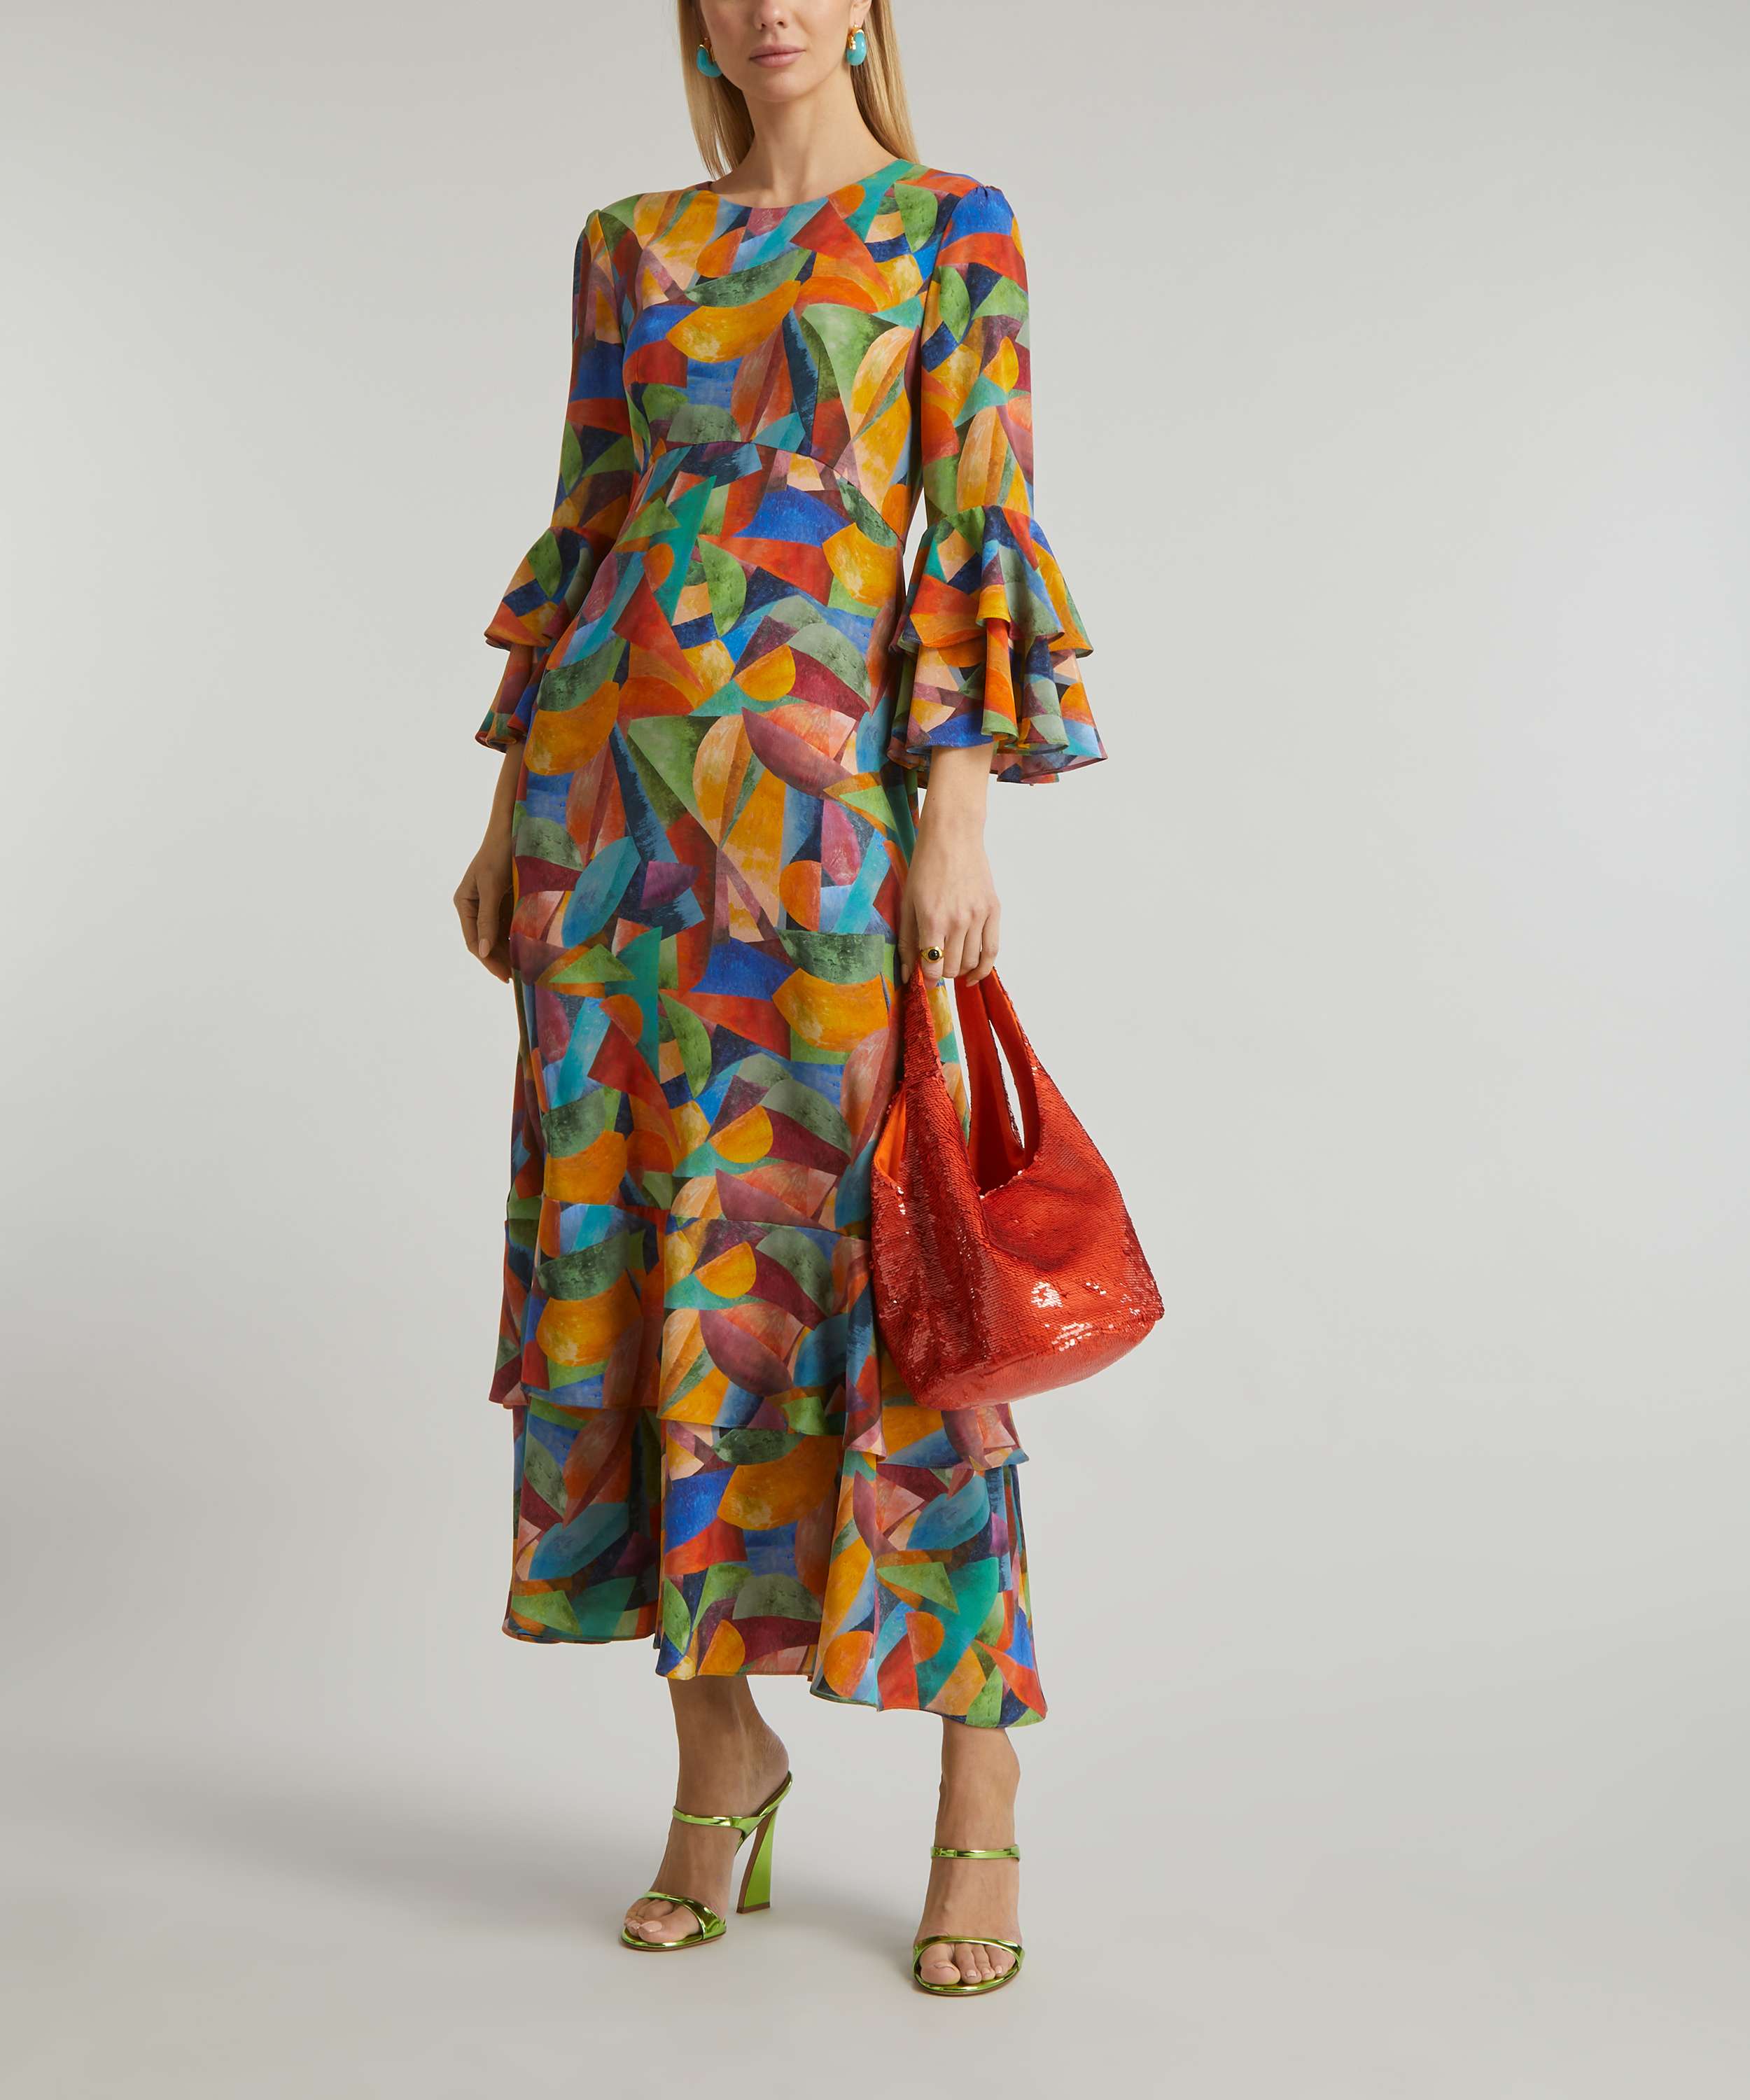 CHARLIE Floral Applique Dress (Pre-order)– Out With Audrey